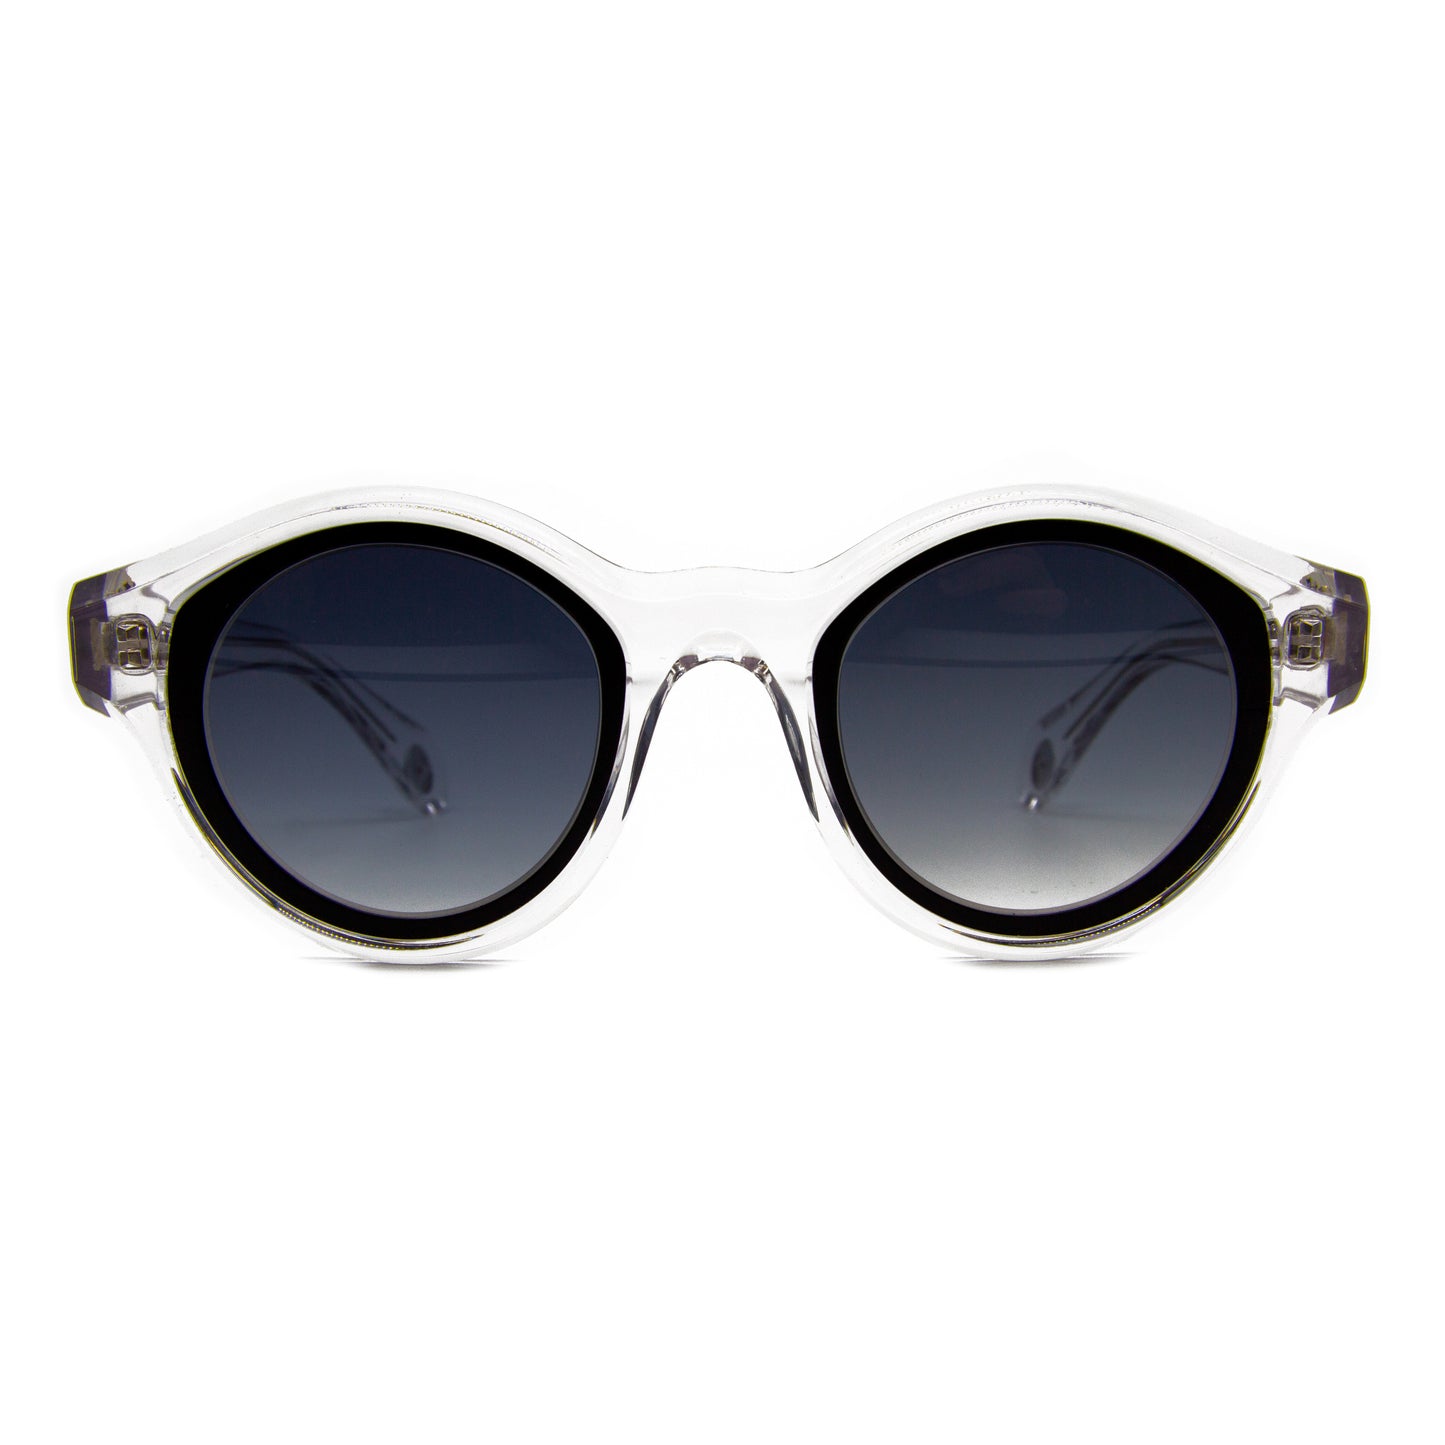 Theo - Eyewear - Mille+94 - 2 - Sunglasses